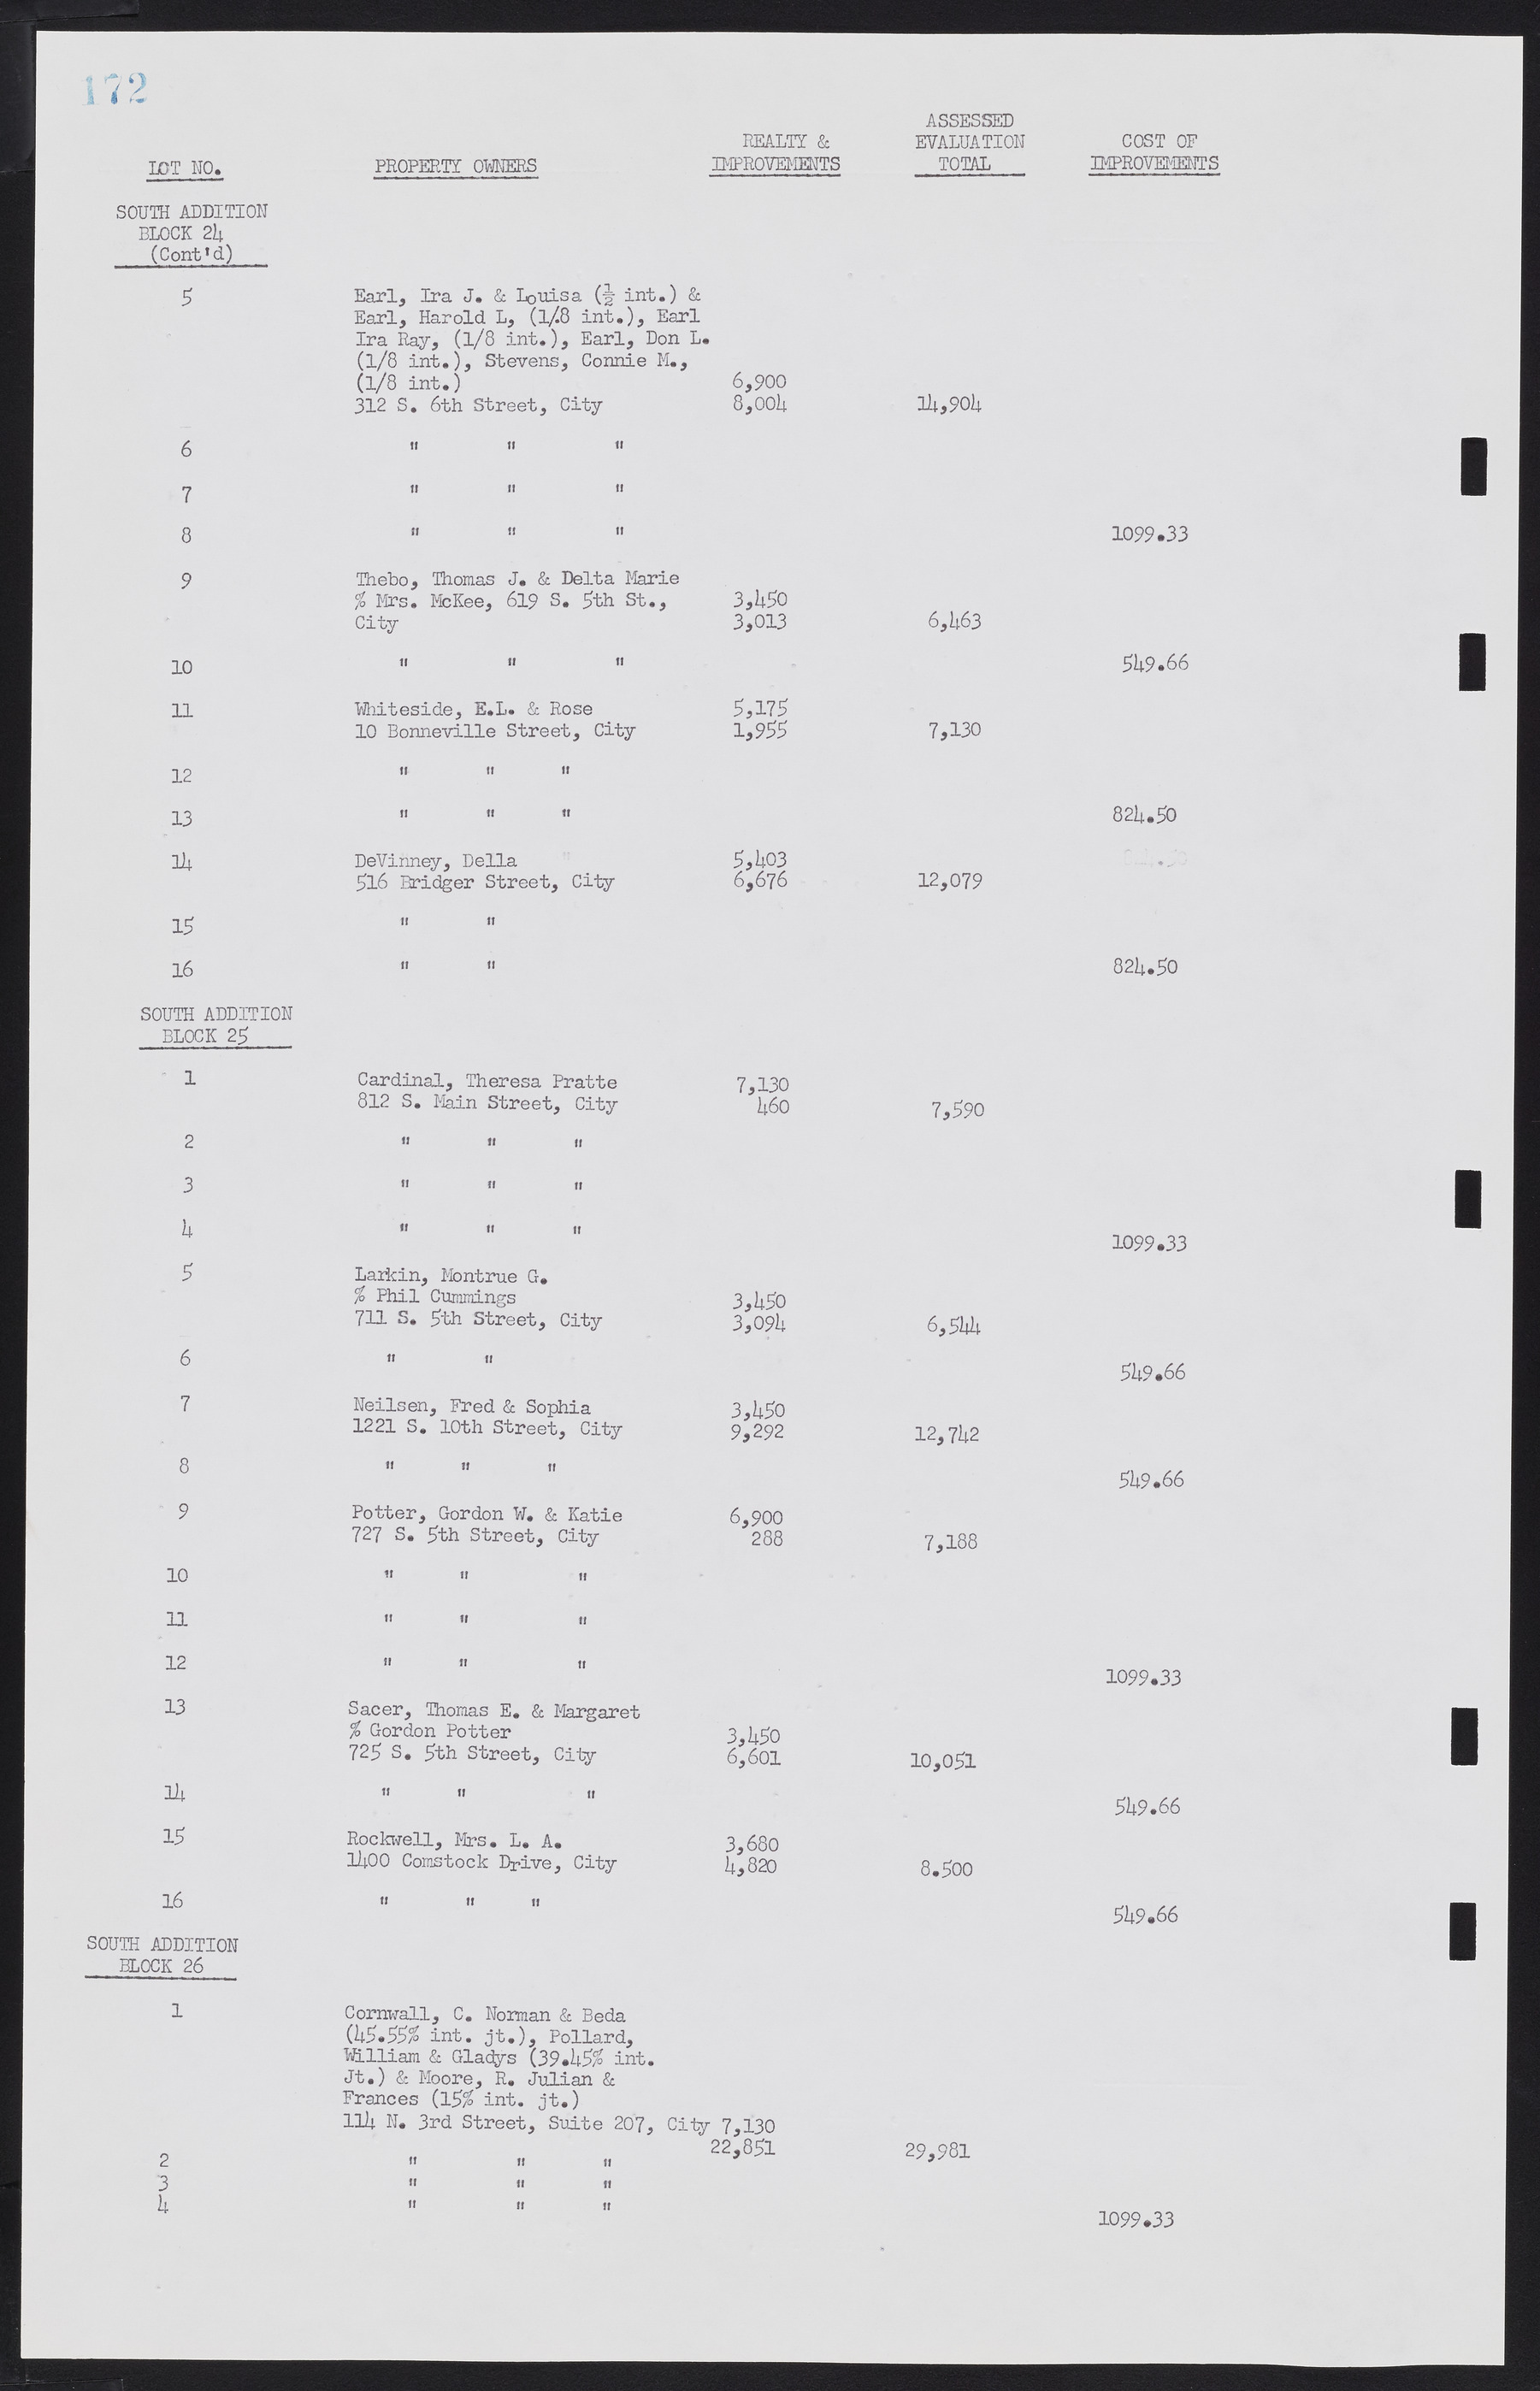 Las Vegas City Commission Minutes, February 17, 1954 to September 21, 1955, lvc000009-178